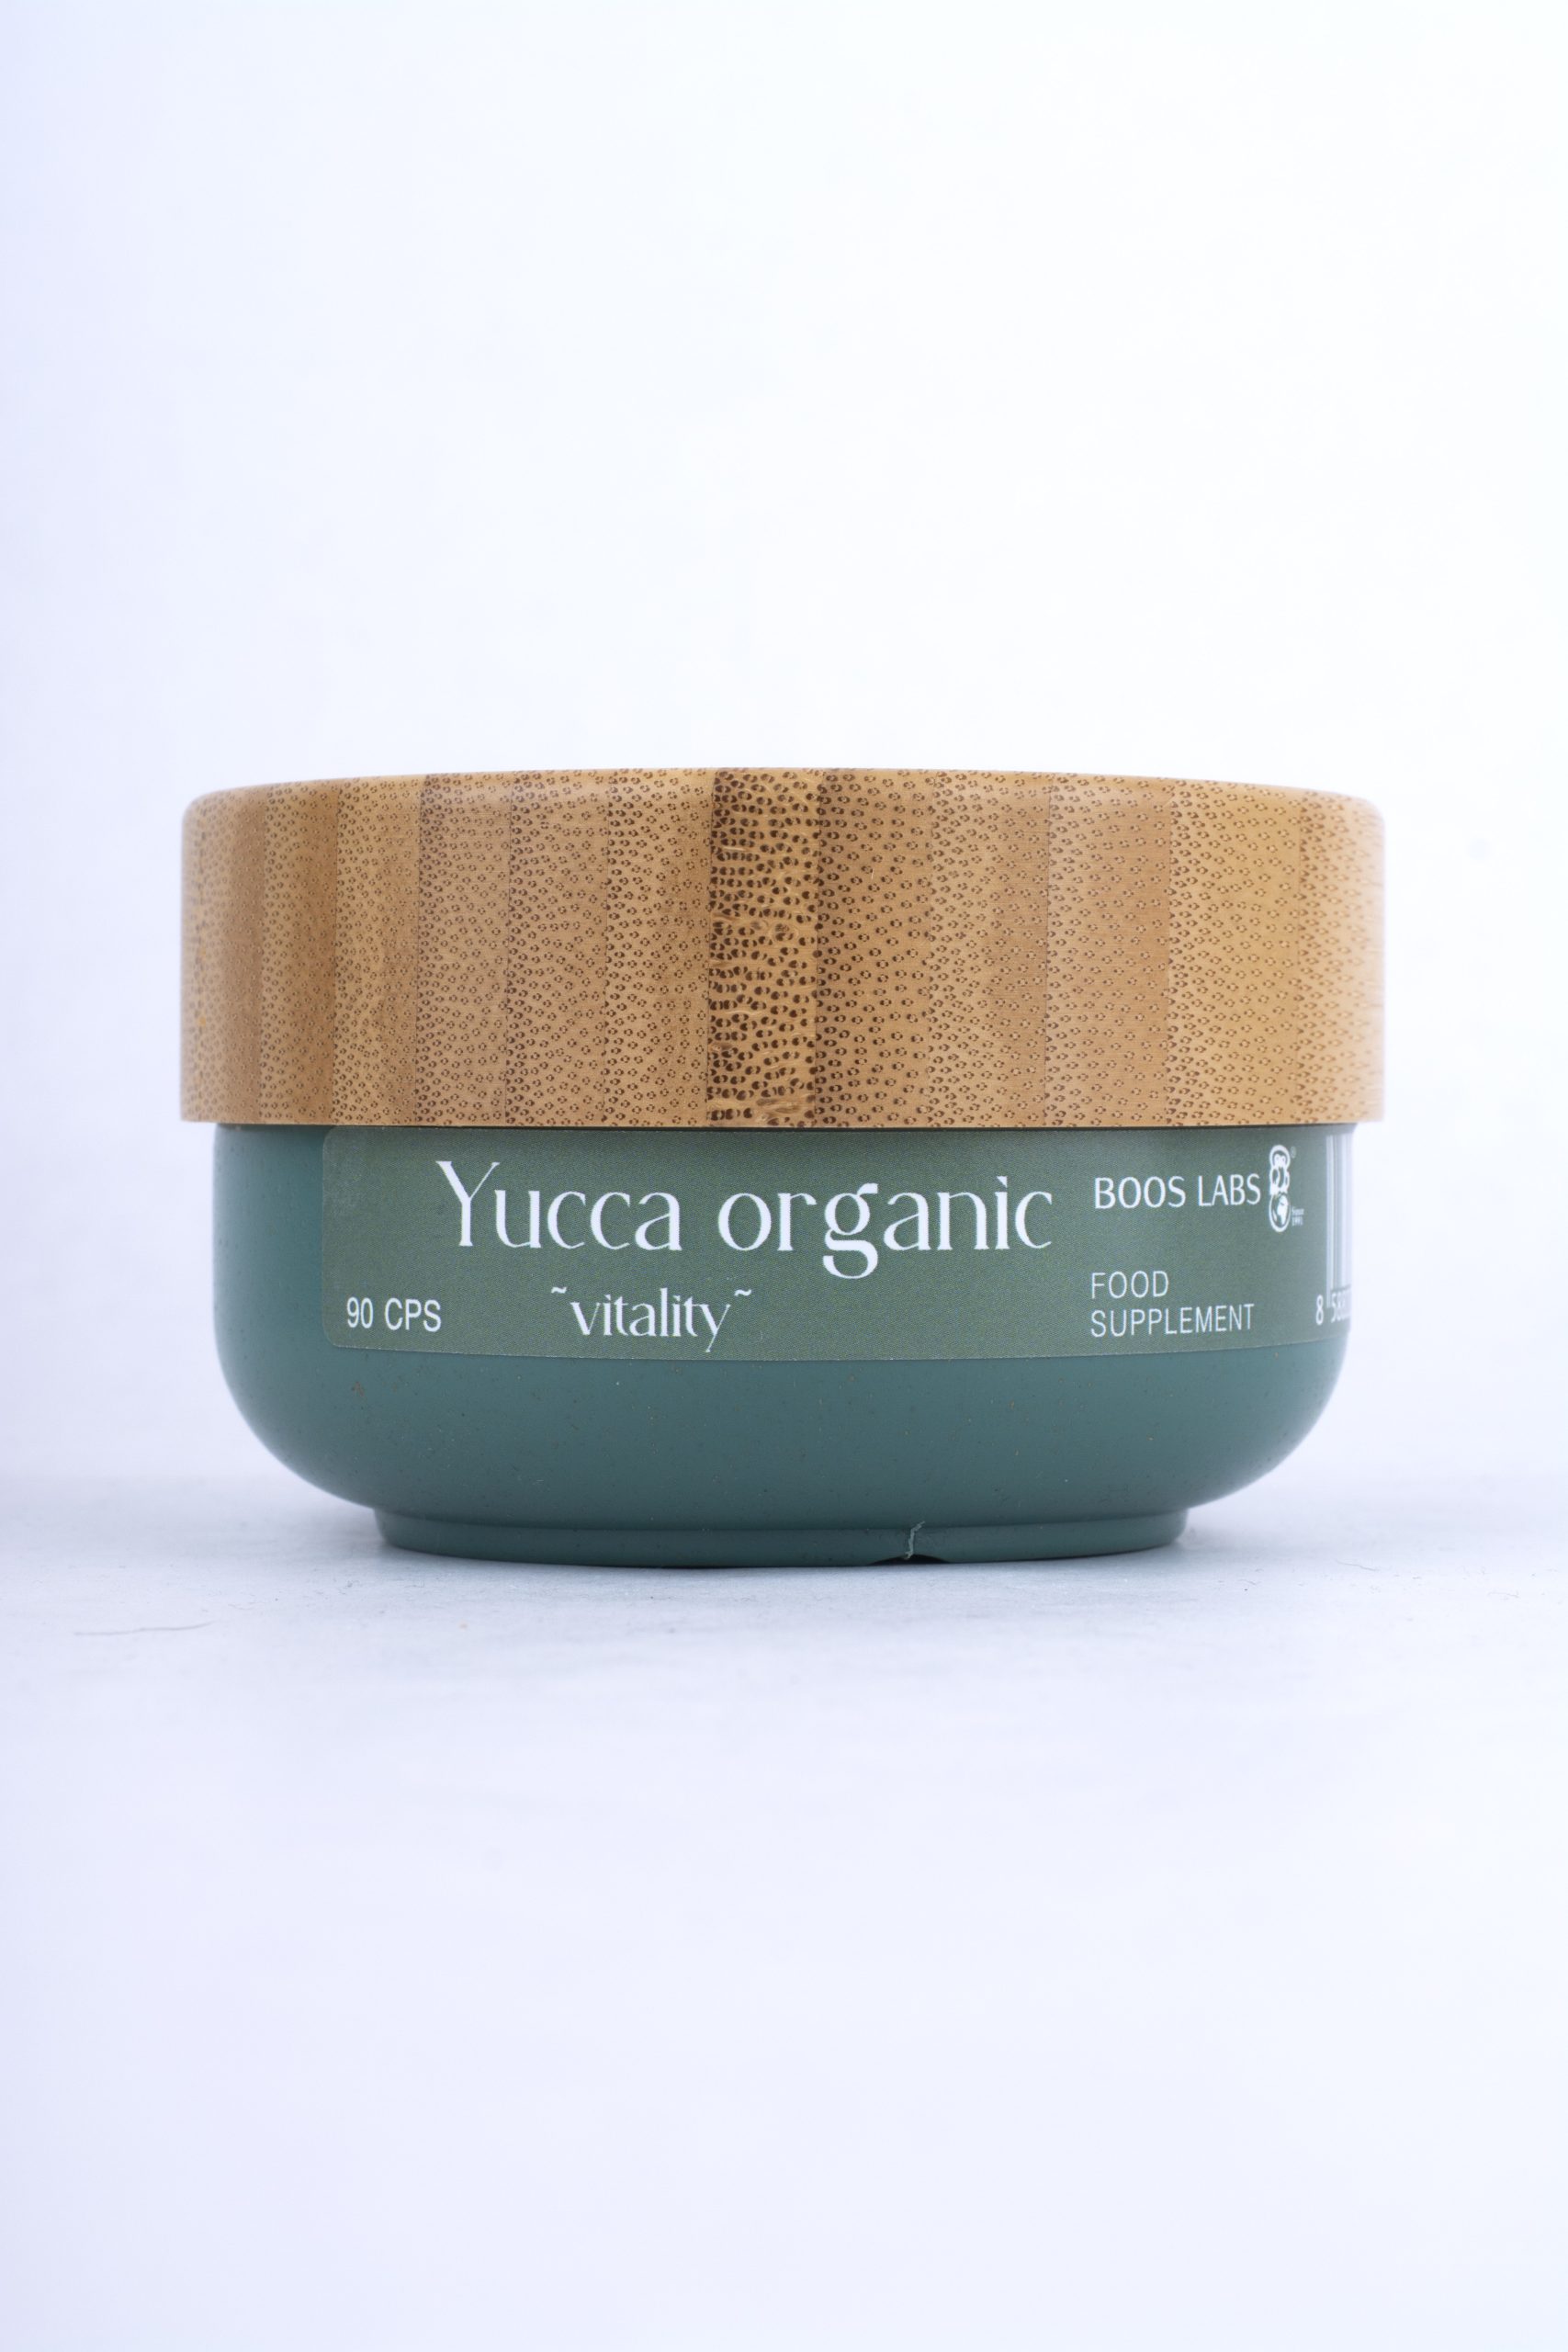 Yucca-organic-vitality-barley-grass-energy-boost